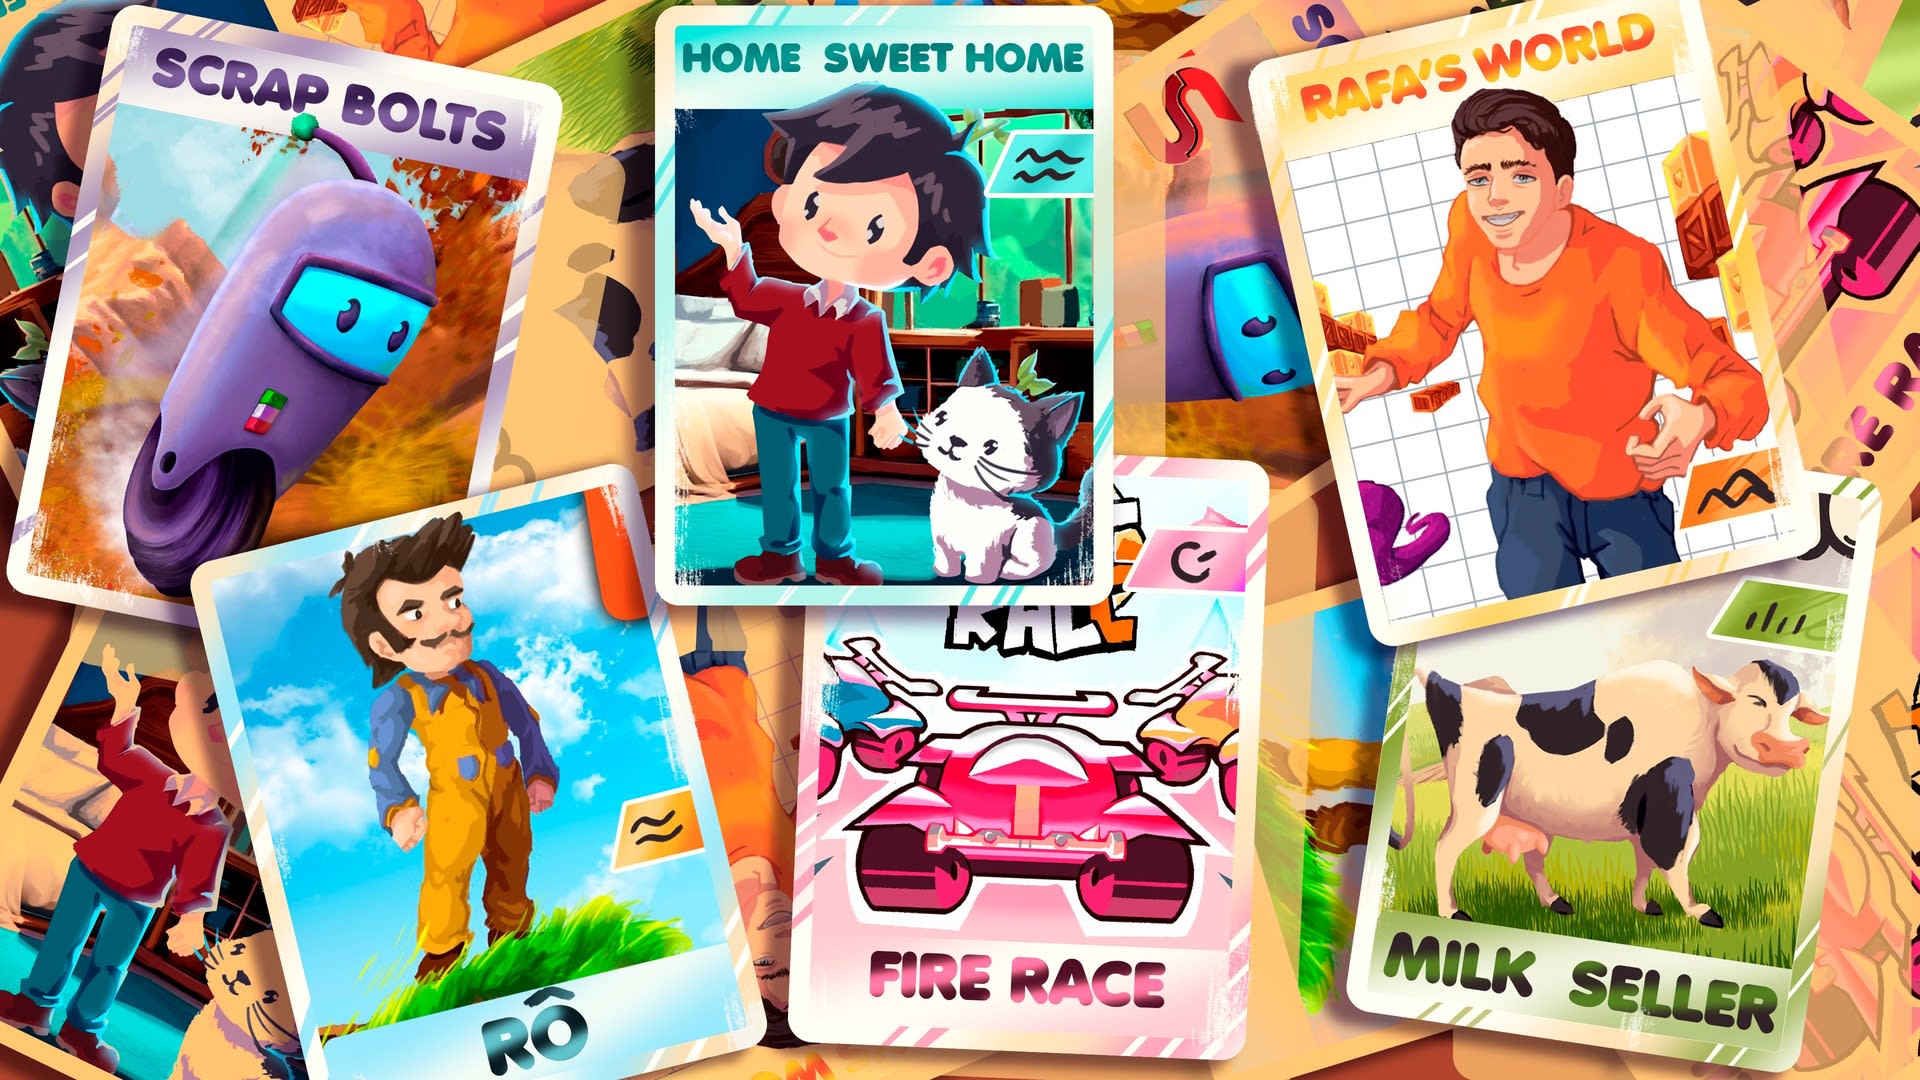 Rô + Fire Race + Scrap Bolts + Milk Seller + Home Sweet Home + Rafa´s World 1